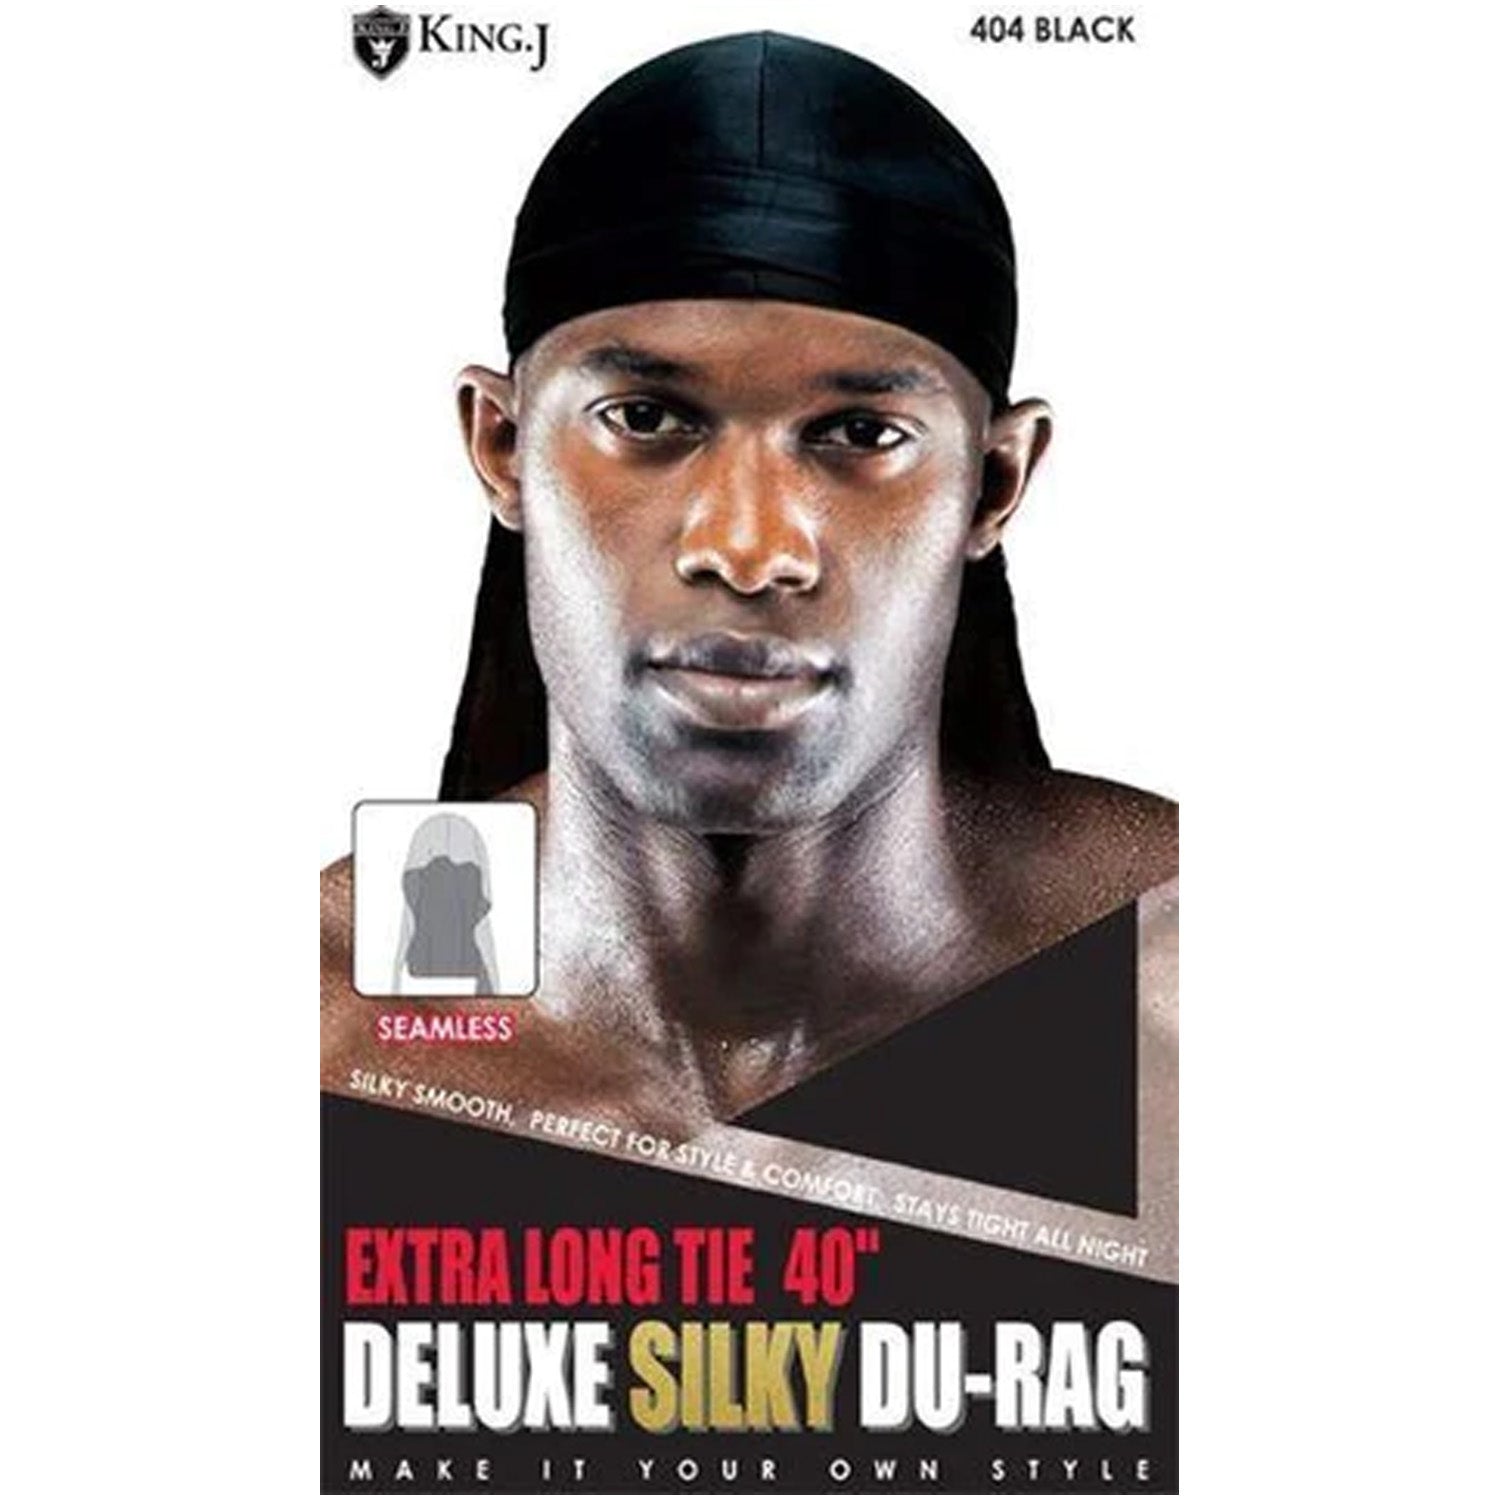 KING J SILKY DELUXE EXTRA LONG TIE 40" DURAG BLK #404